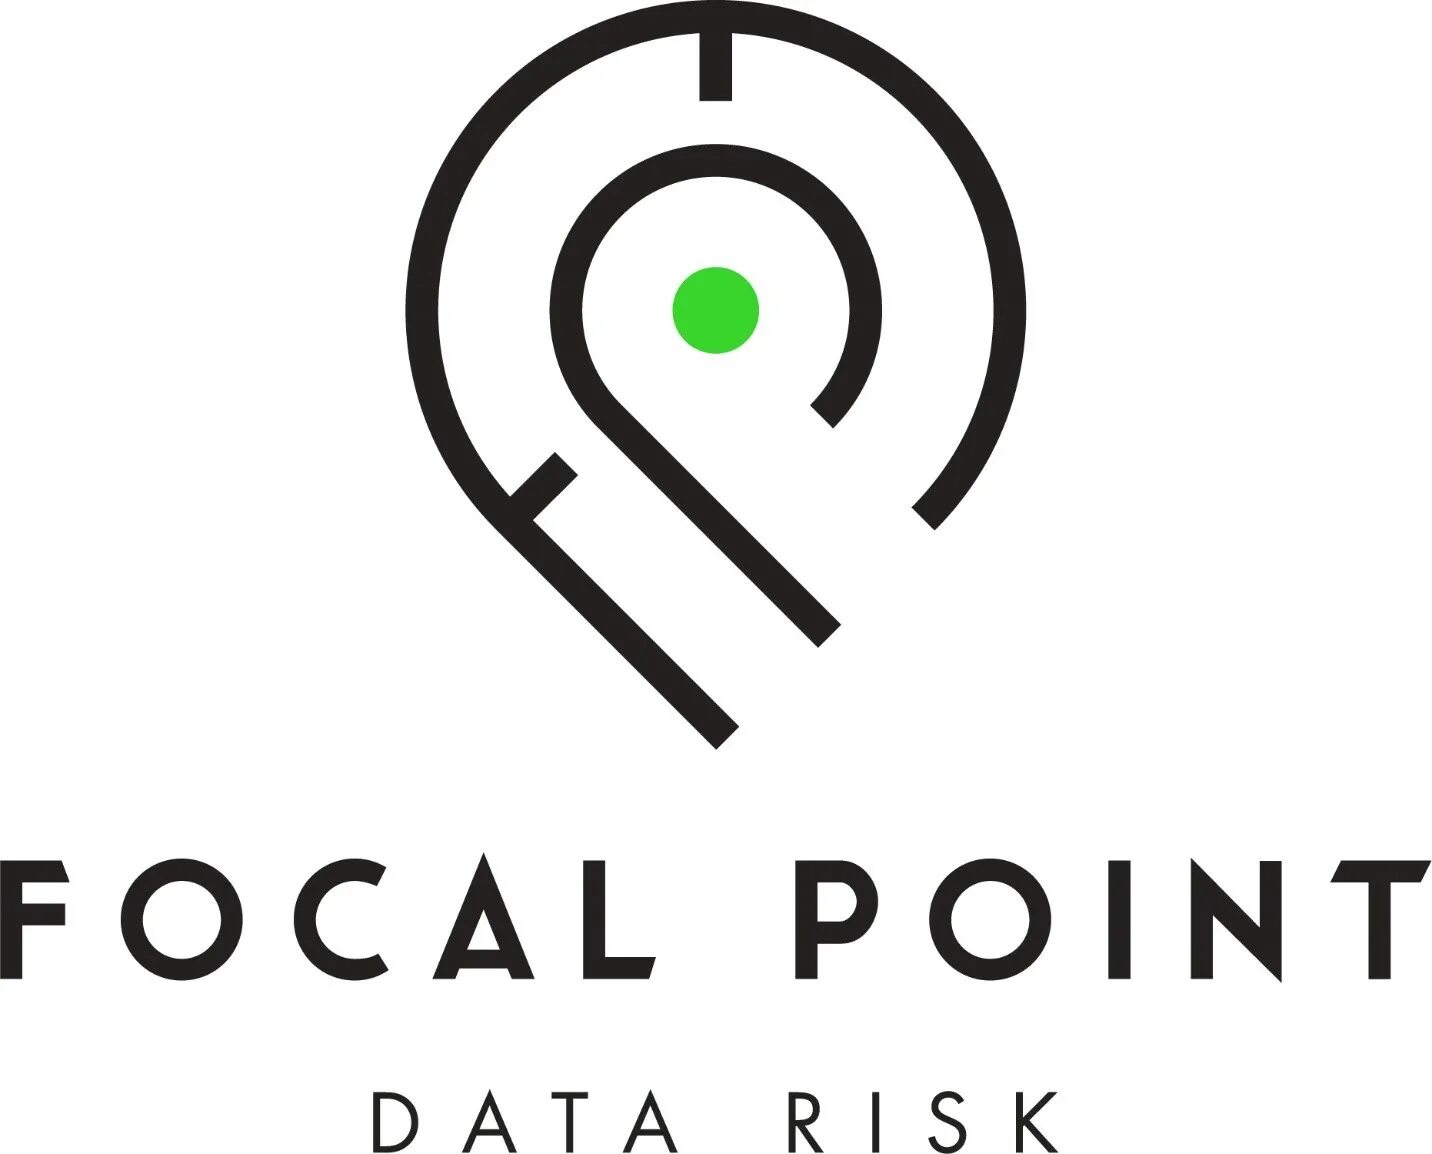 Health point лого. Datapoint логотип. Фокал пои́нт. Location e logo. Open co